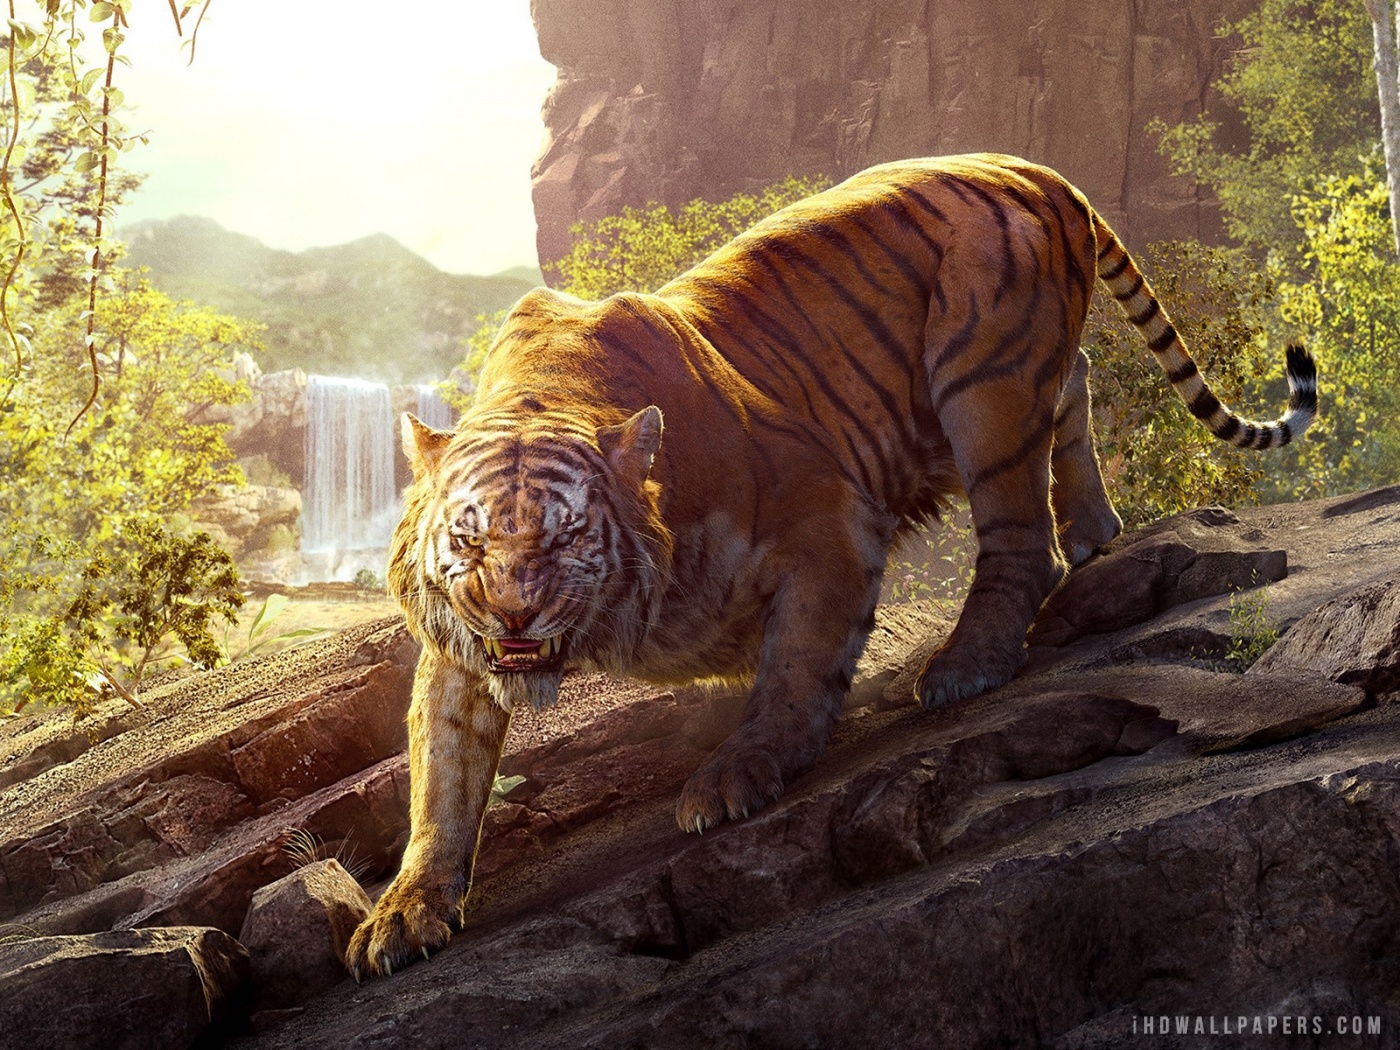 Shere Khan The Jungle Book 2016 HD Wallpaper   iHD Wallpapers